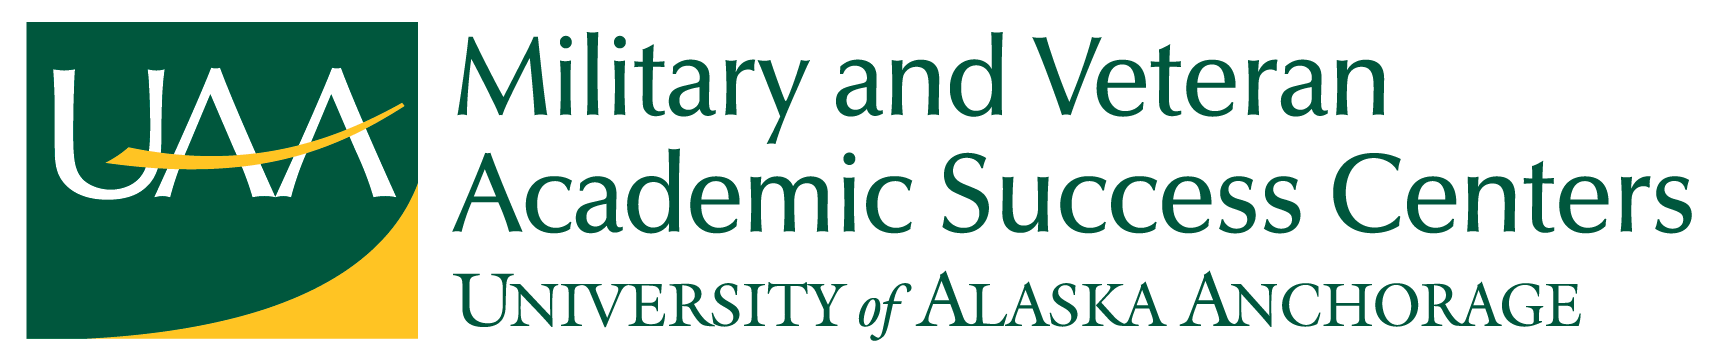 UAA Military and Veteran Academic Success Centers logo